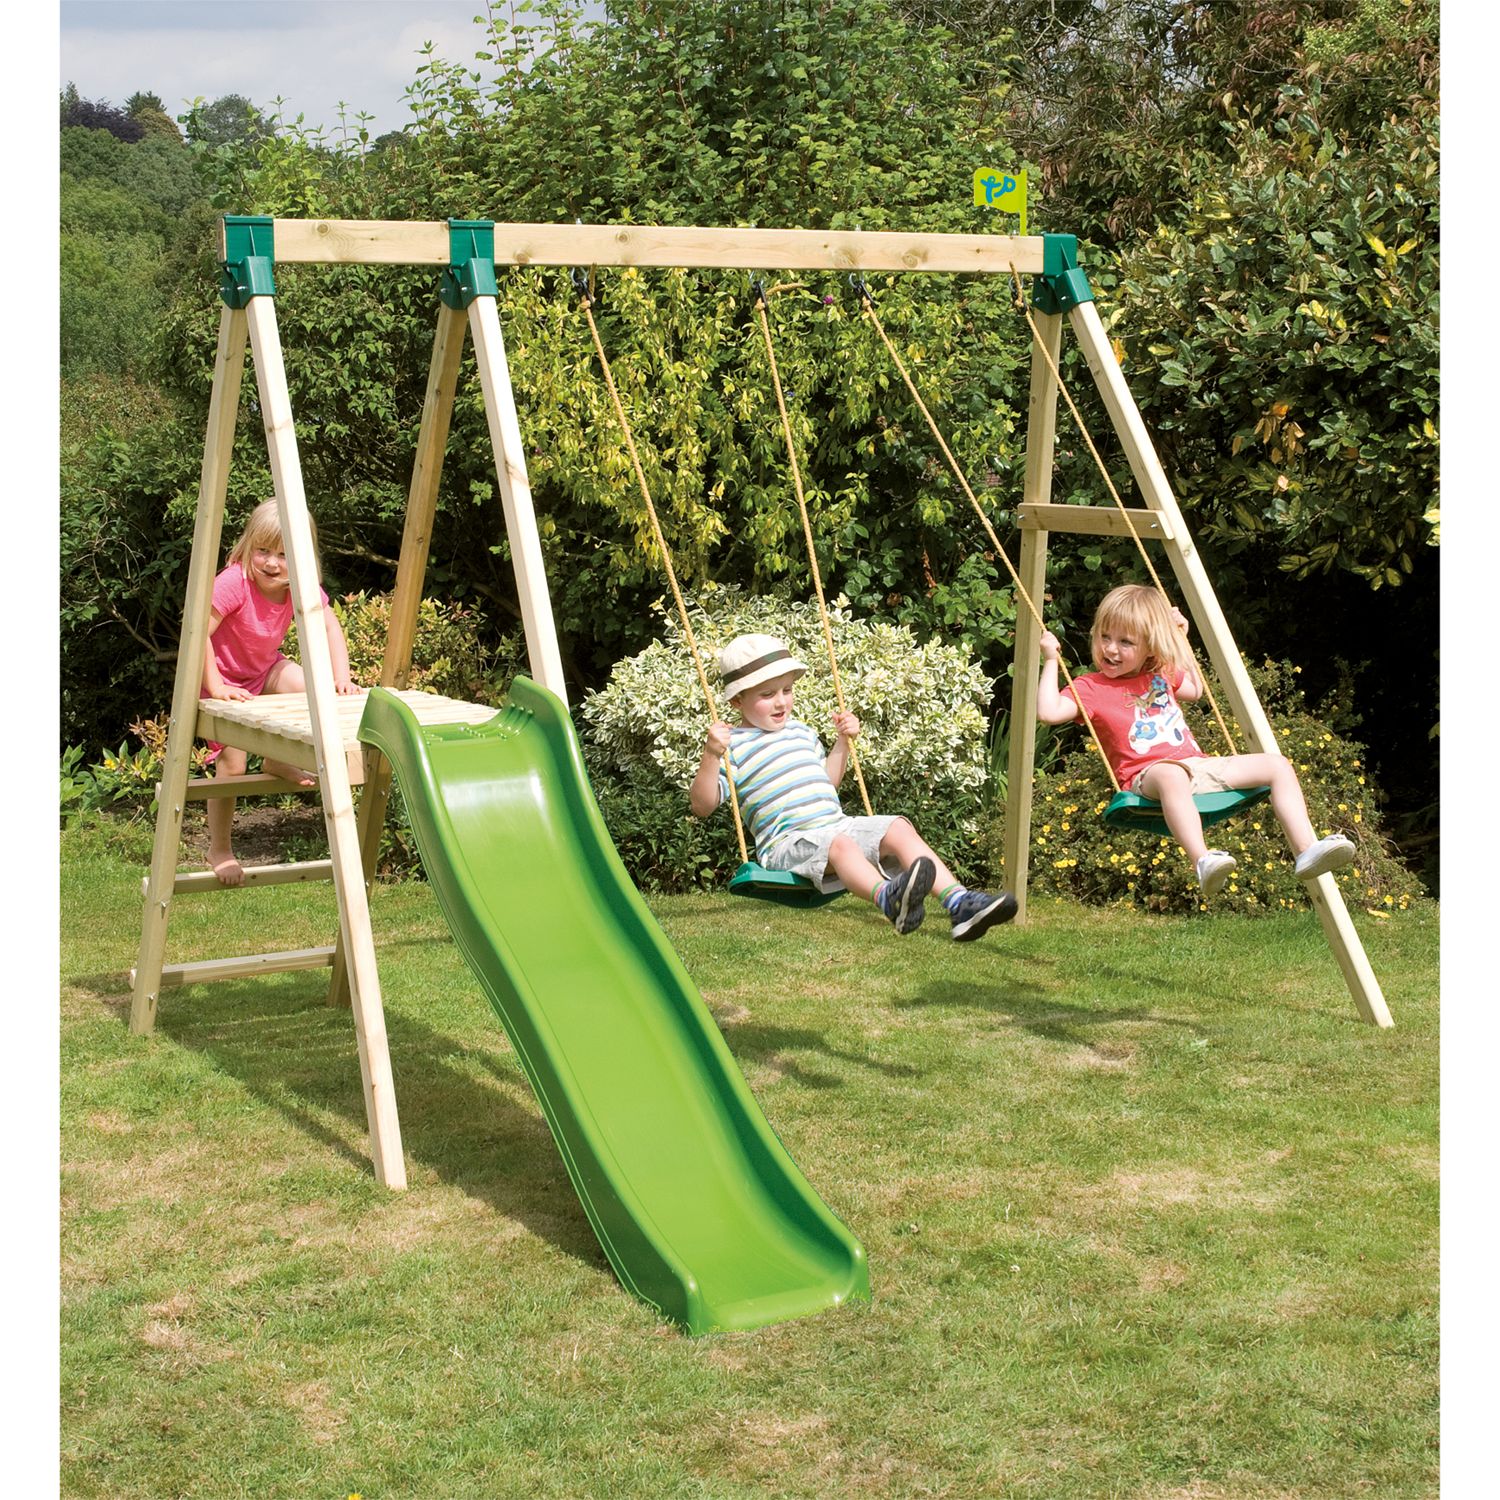 slide and swing set